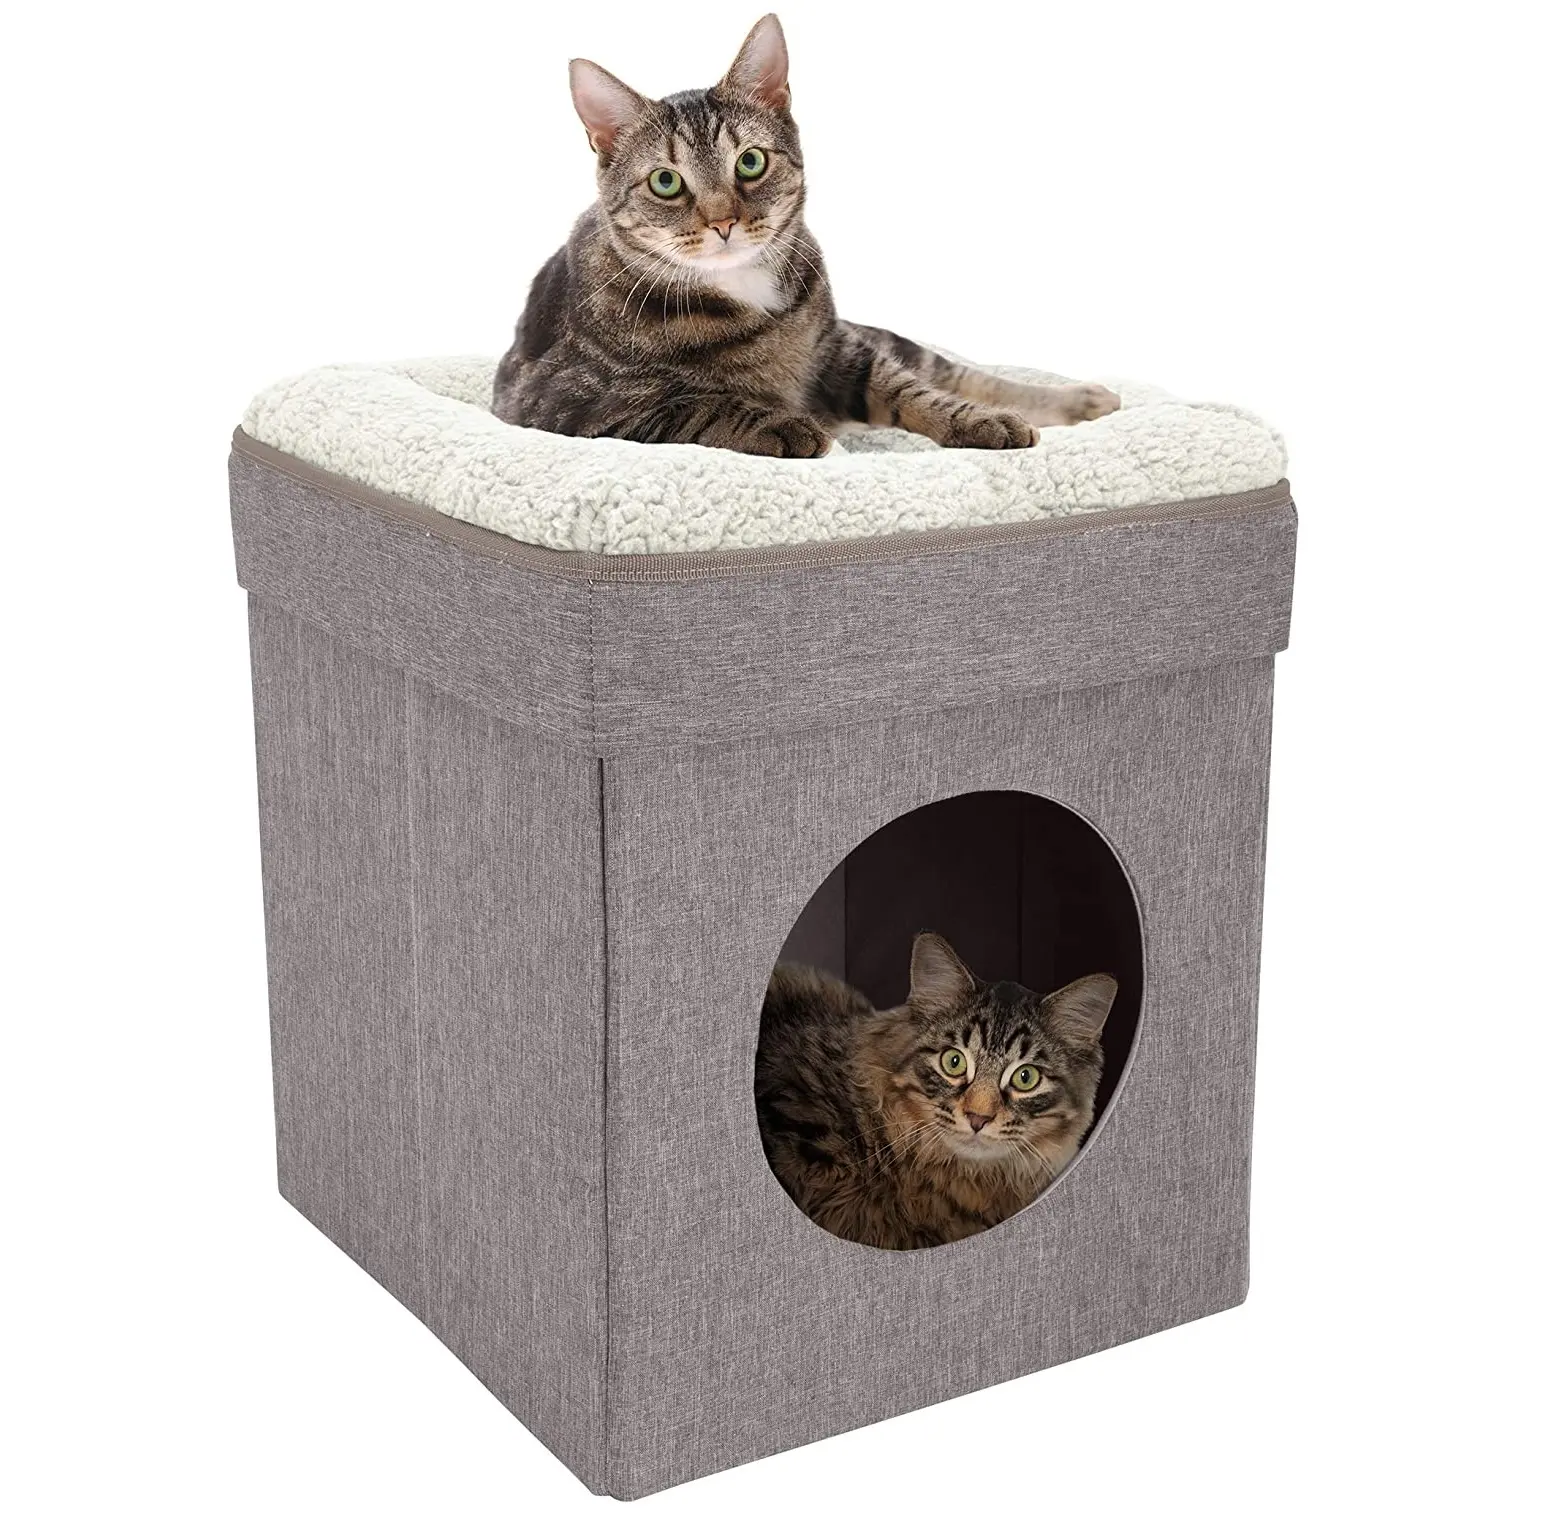 2 in1小型犬用ベッドキャットテントハット洞窟ベッド折りたたみ式キャットハウス屋内猫用ベッド付きCasa para gatos con cama